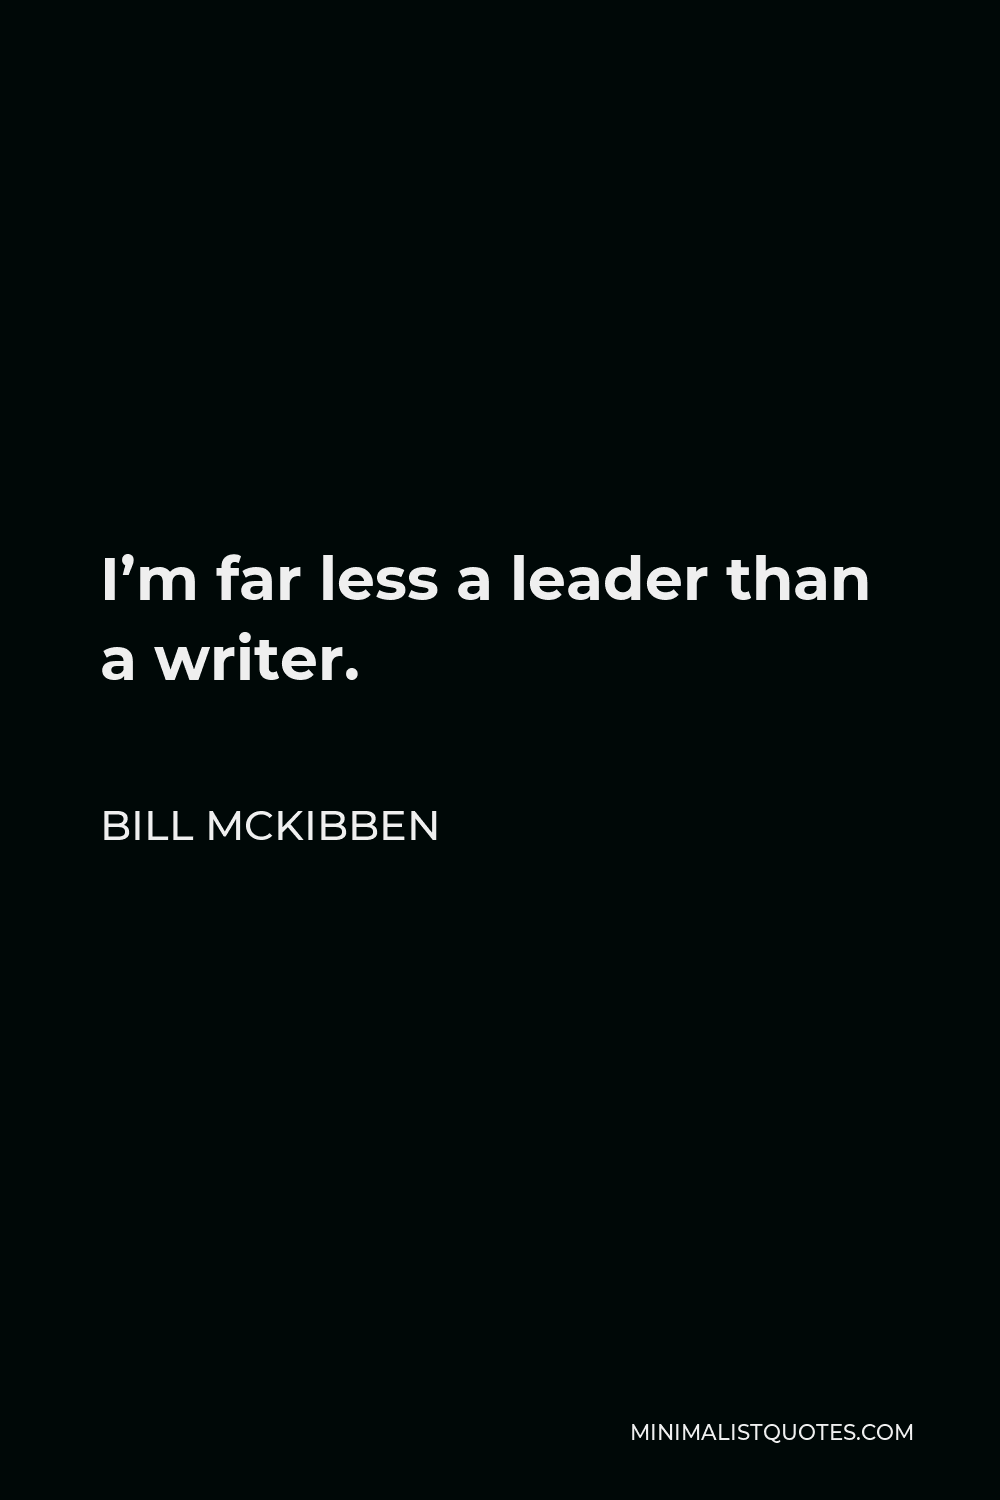 Bill McKibben Quote - I’m far less a leader than a writer.